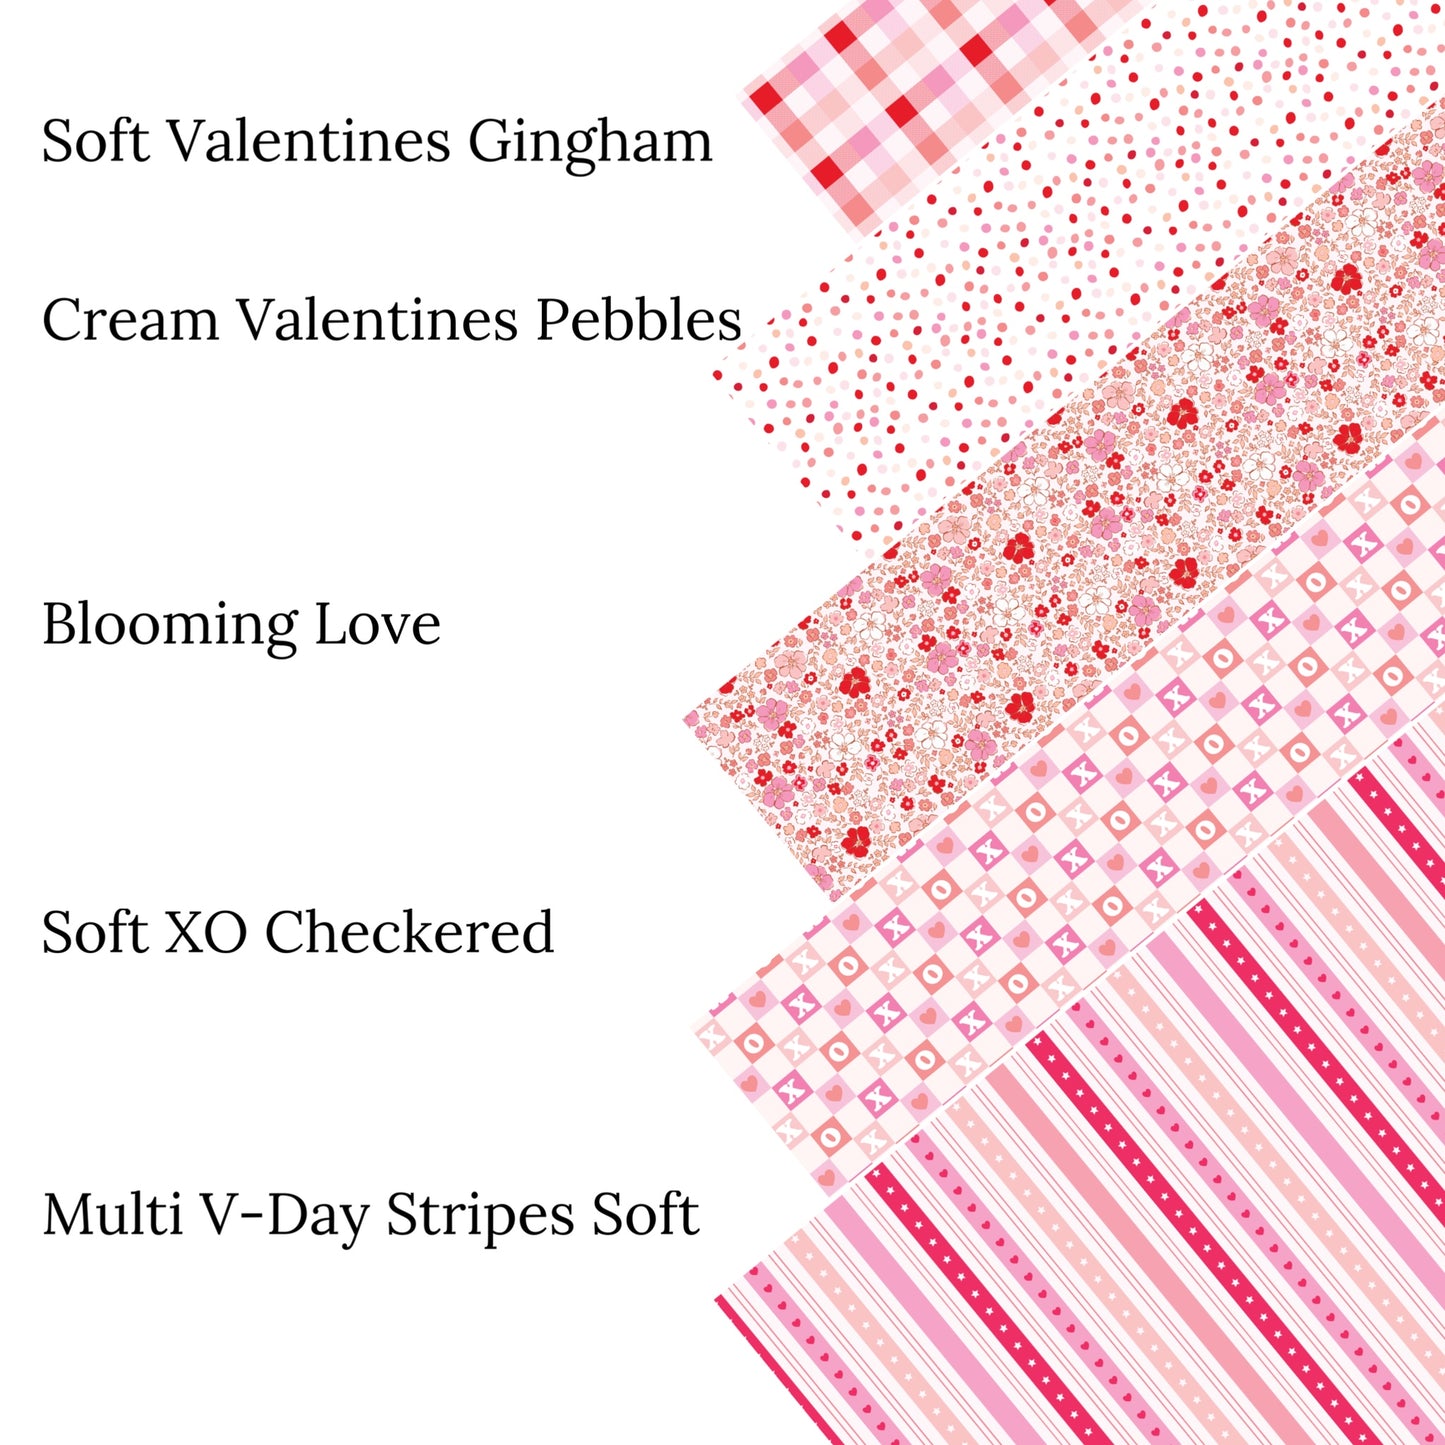 Cream Valentine’s Pebbles Faux Leather Sheets